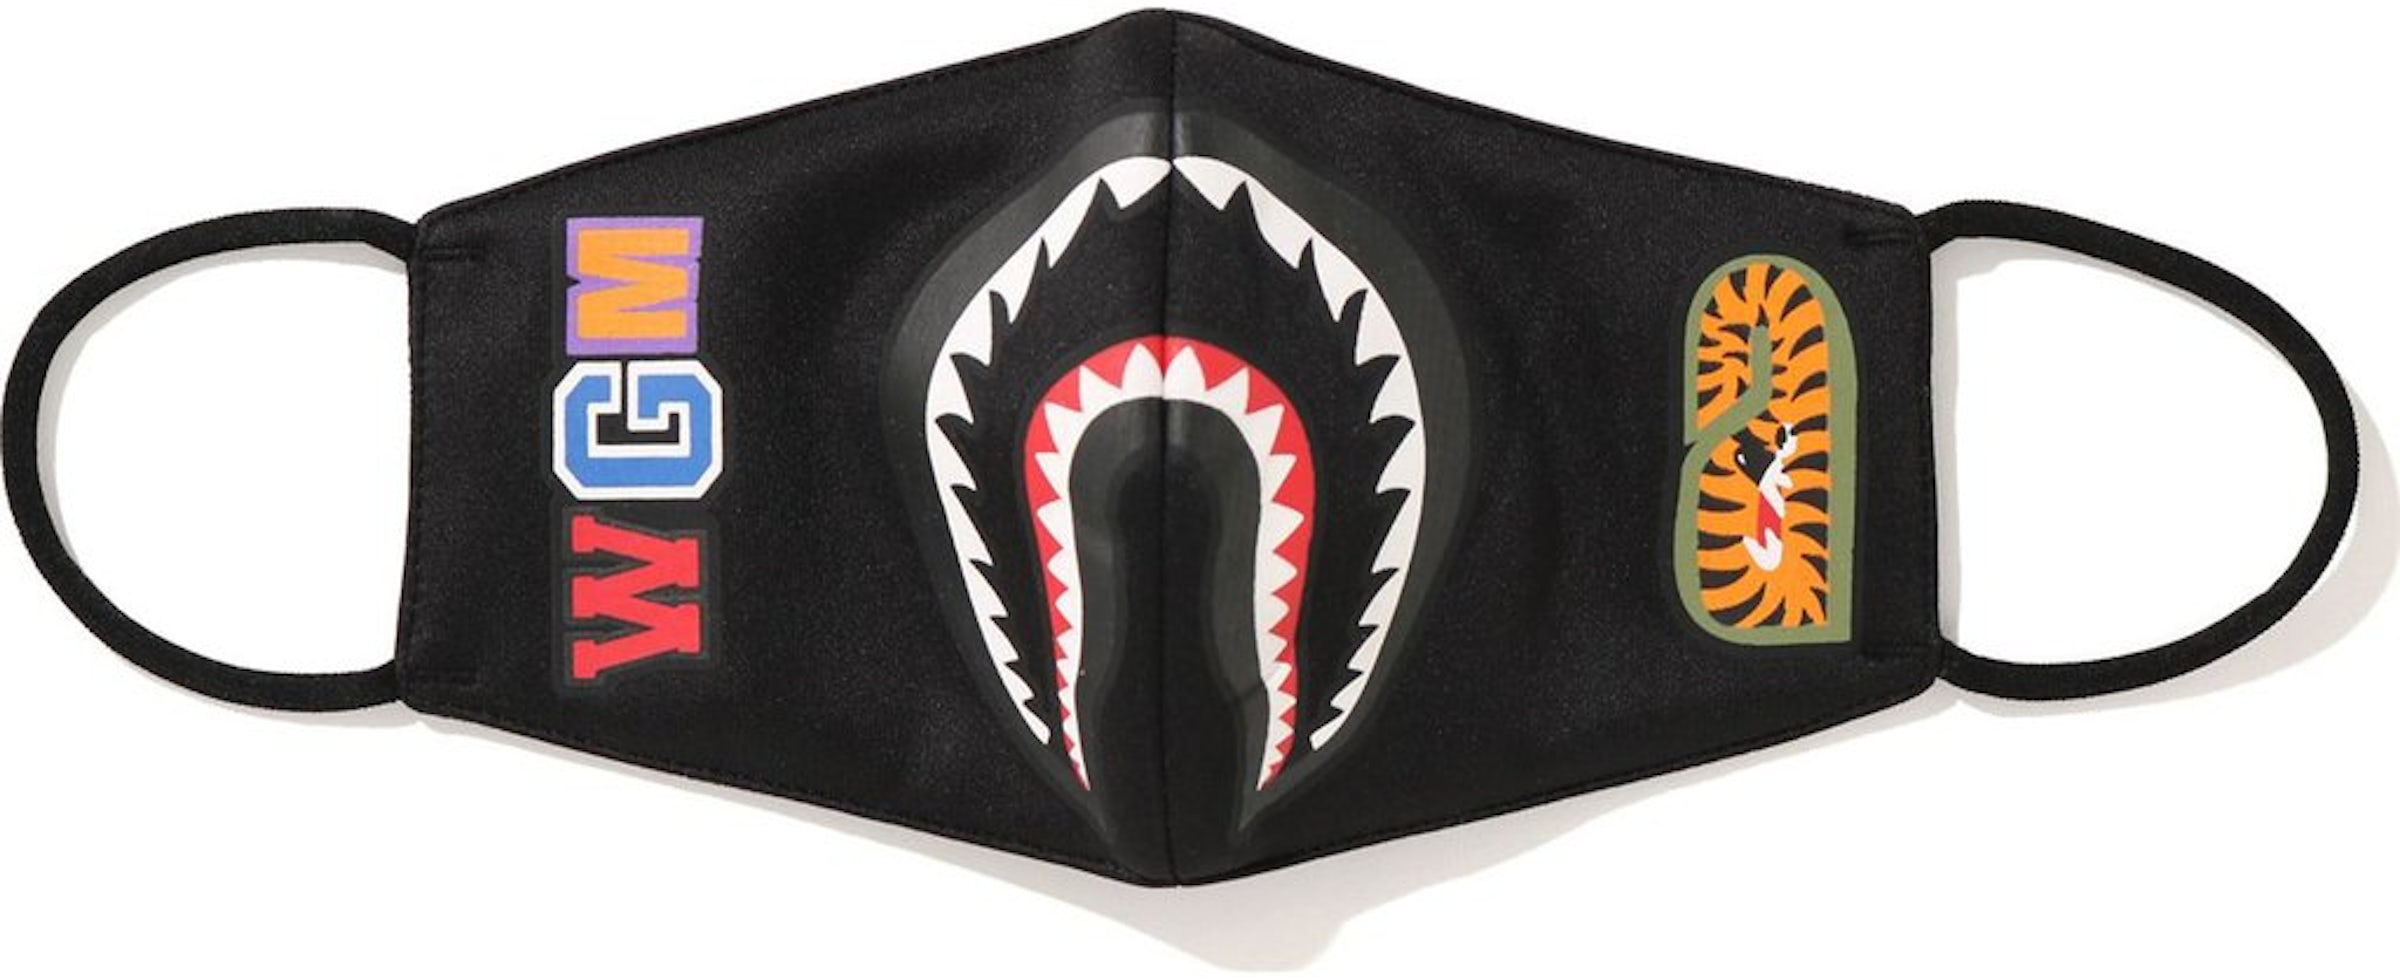 ORIGINAL Bape Mask Shark A Bathing Ape ABC Camo Face Mouth Muffle USA  Seller